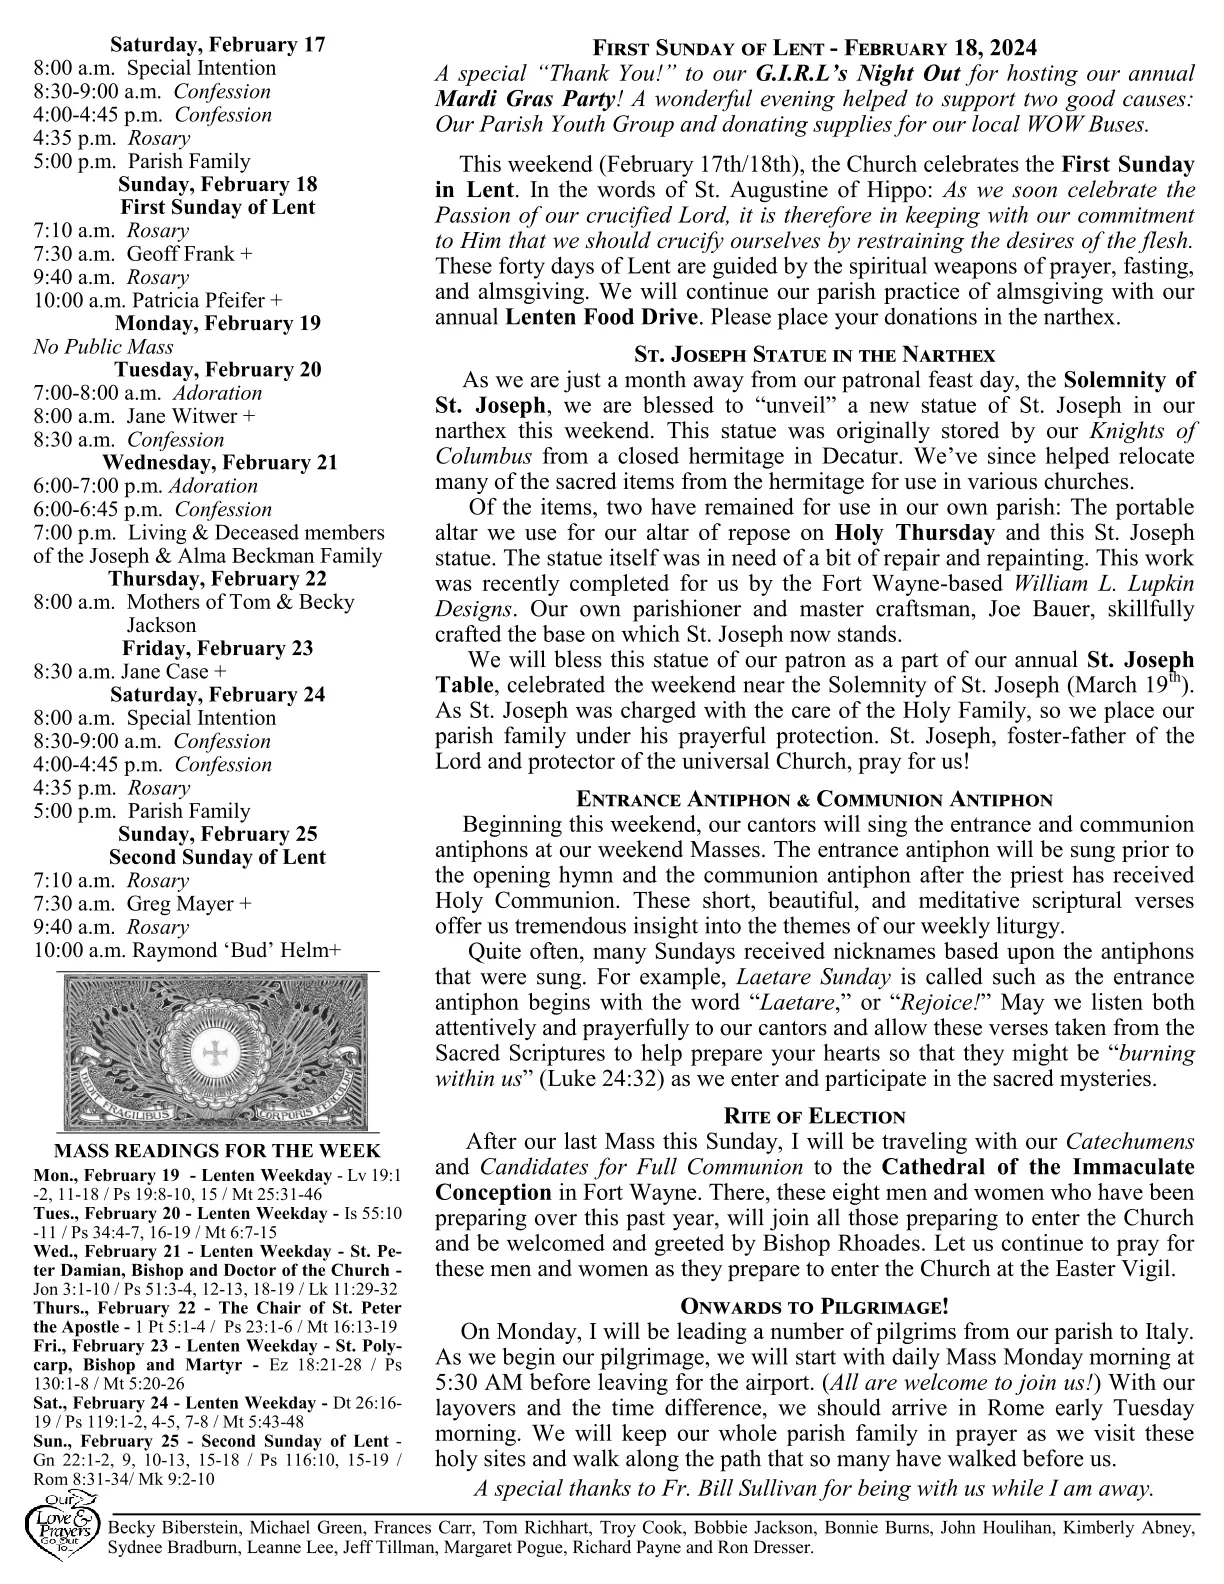 Feb 18, 2024 - Bulletin - Page 2